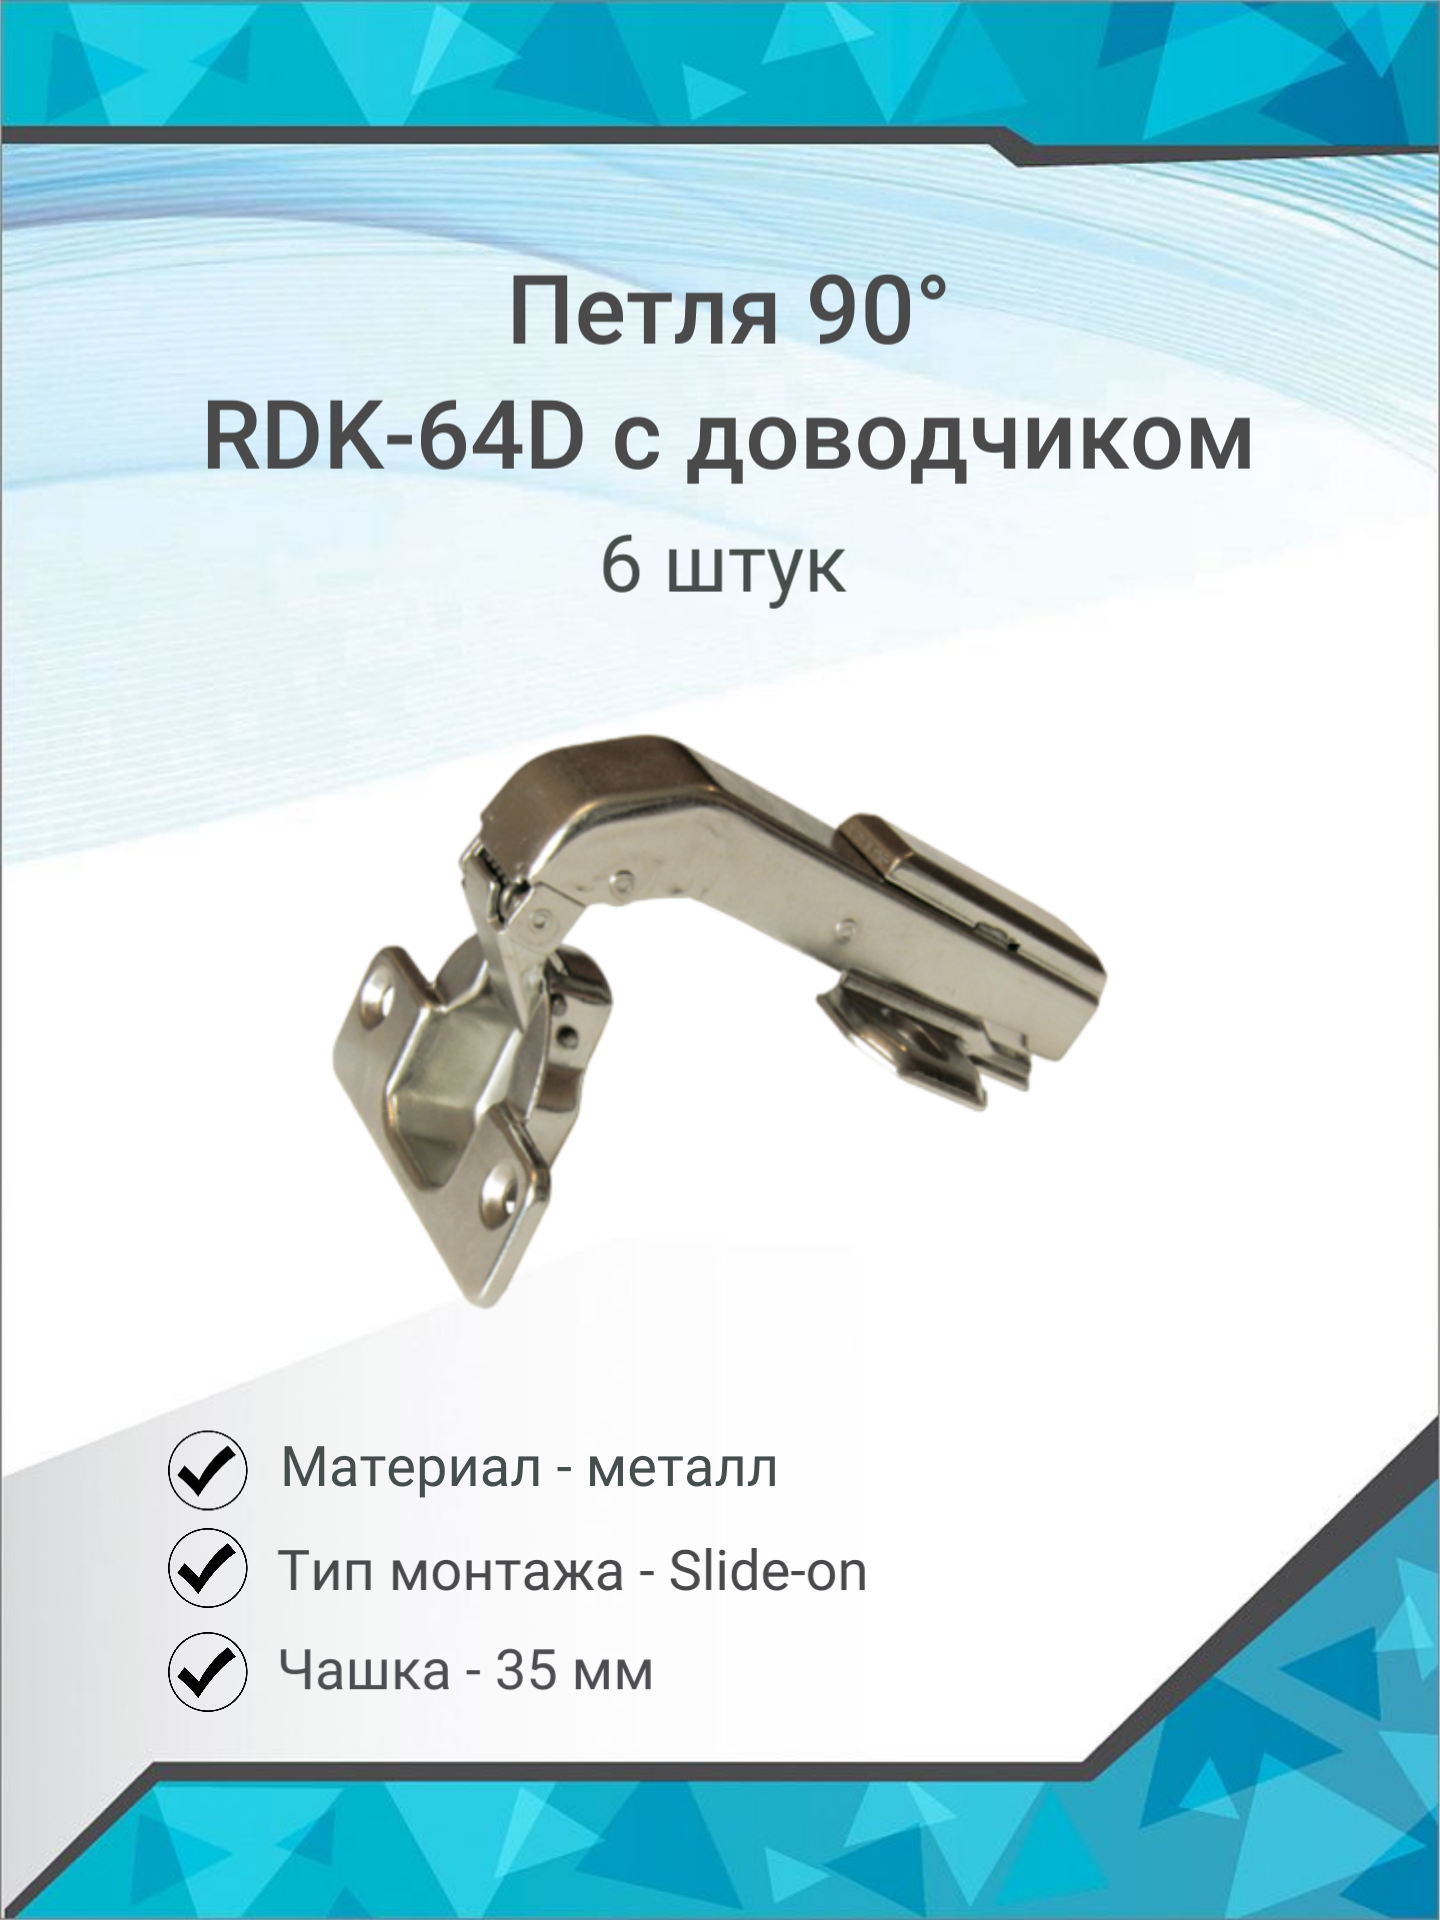 Петля 90 RDK 64D Slide-on с доводчиком ( 6 шт. )